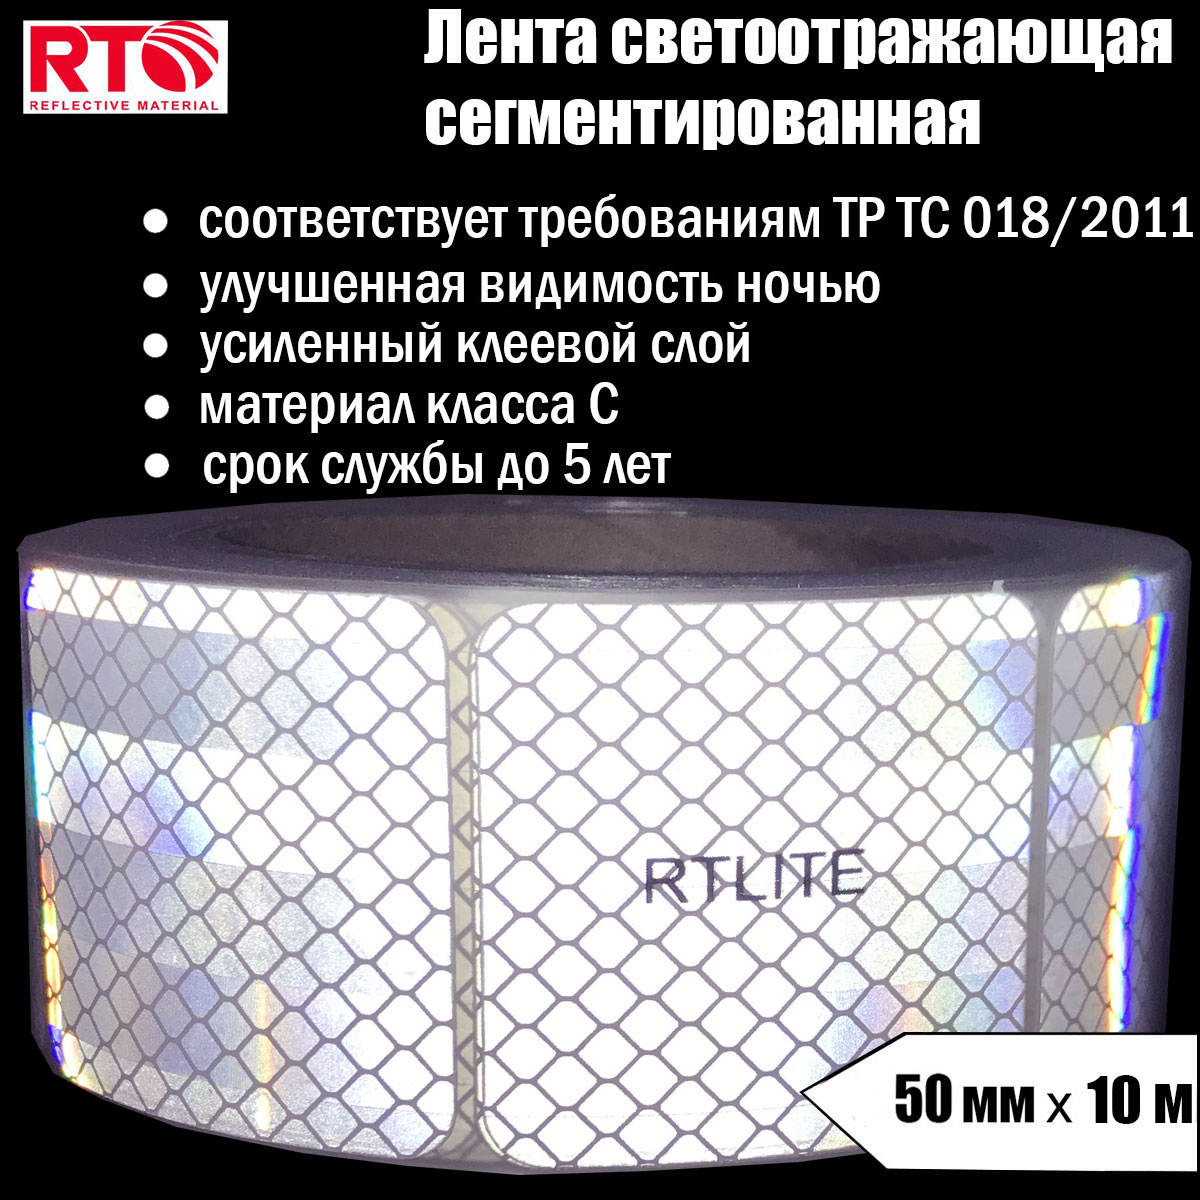 Лента светоотражающая сегментированная RTLITE RT-V104 для контурной маркировки, 50мм х 10м лента светоотражающая для контурной маркировки rtlite rt v104 50 8 мм х 50 м желтая